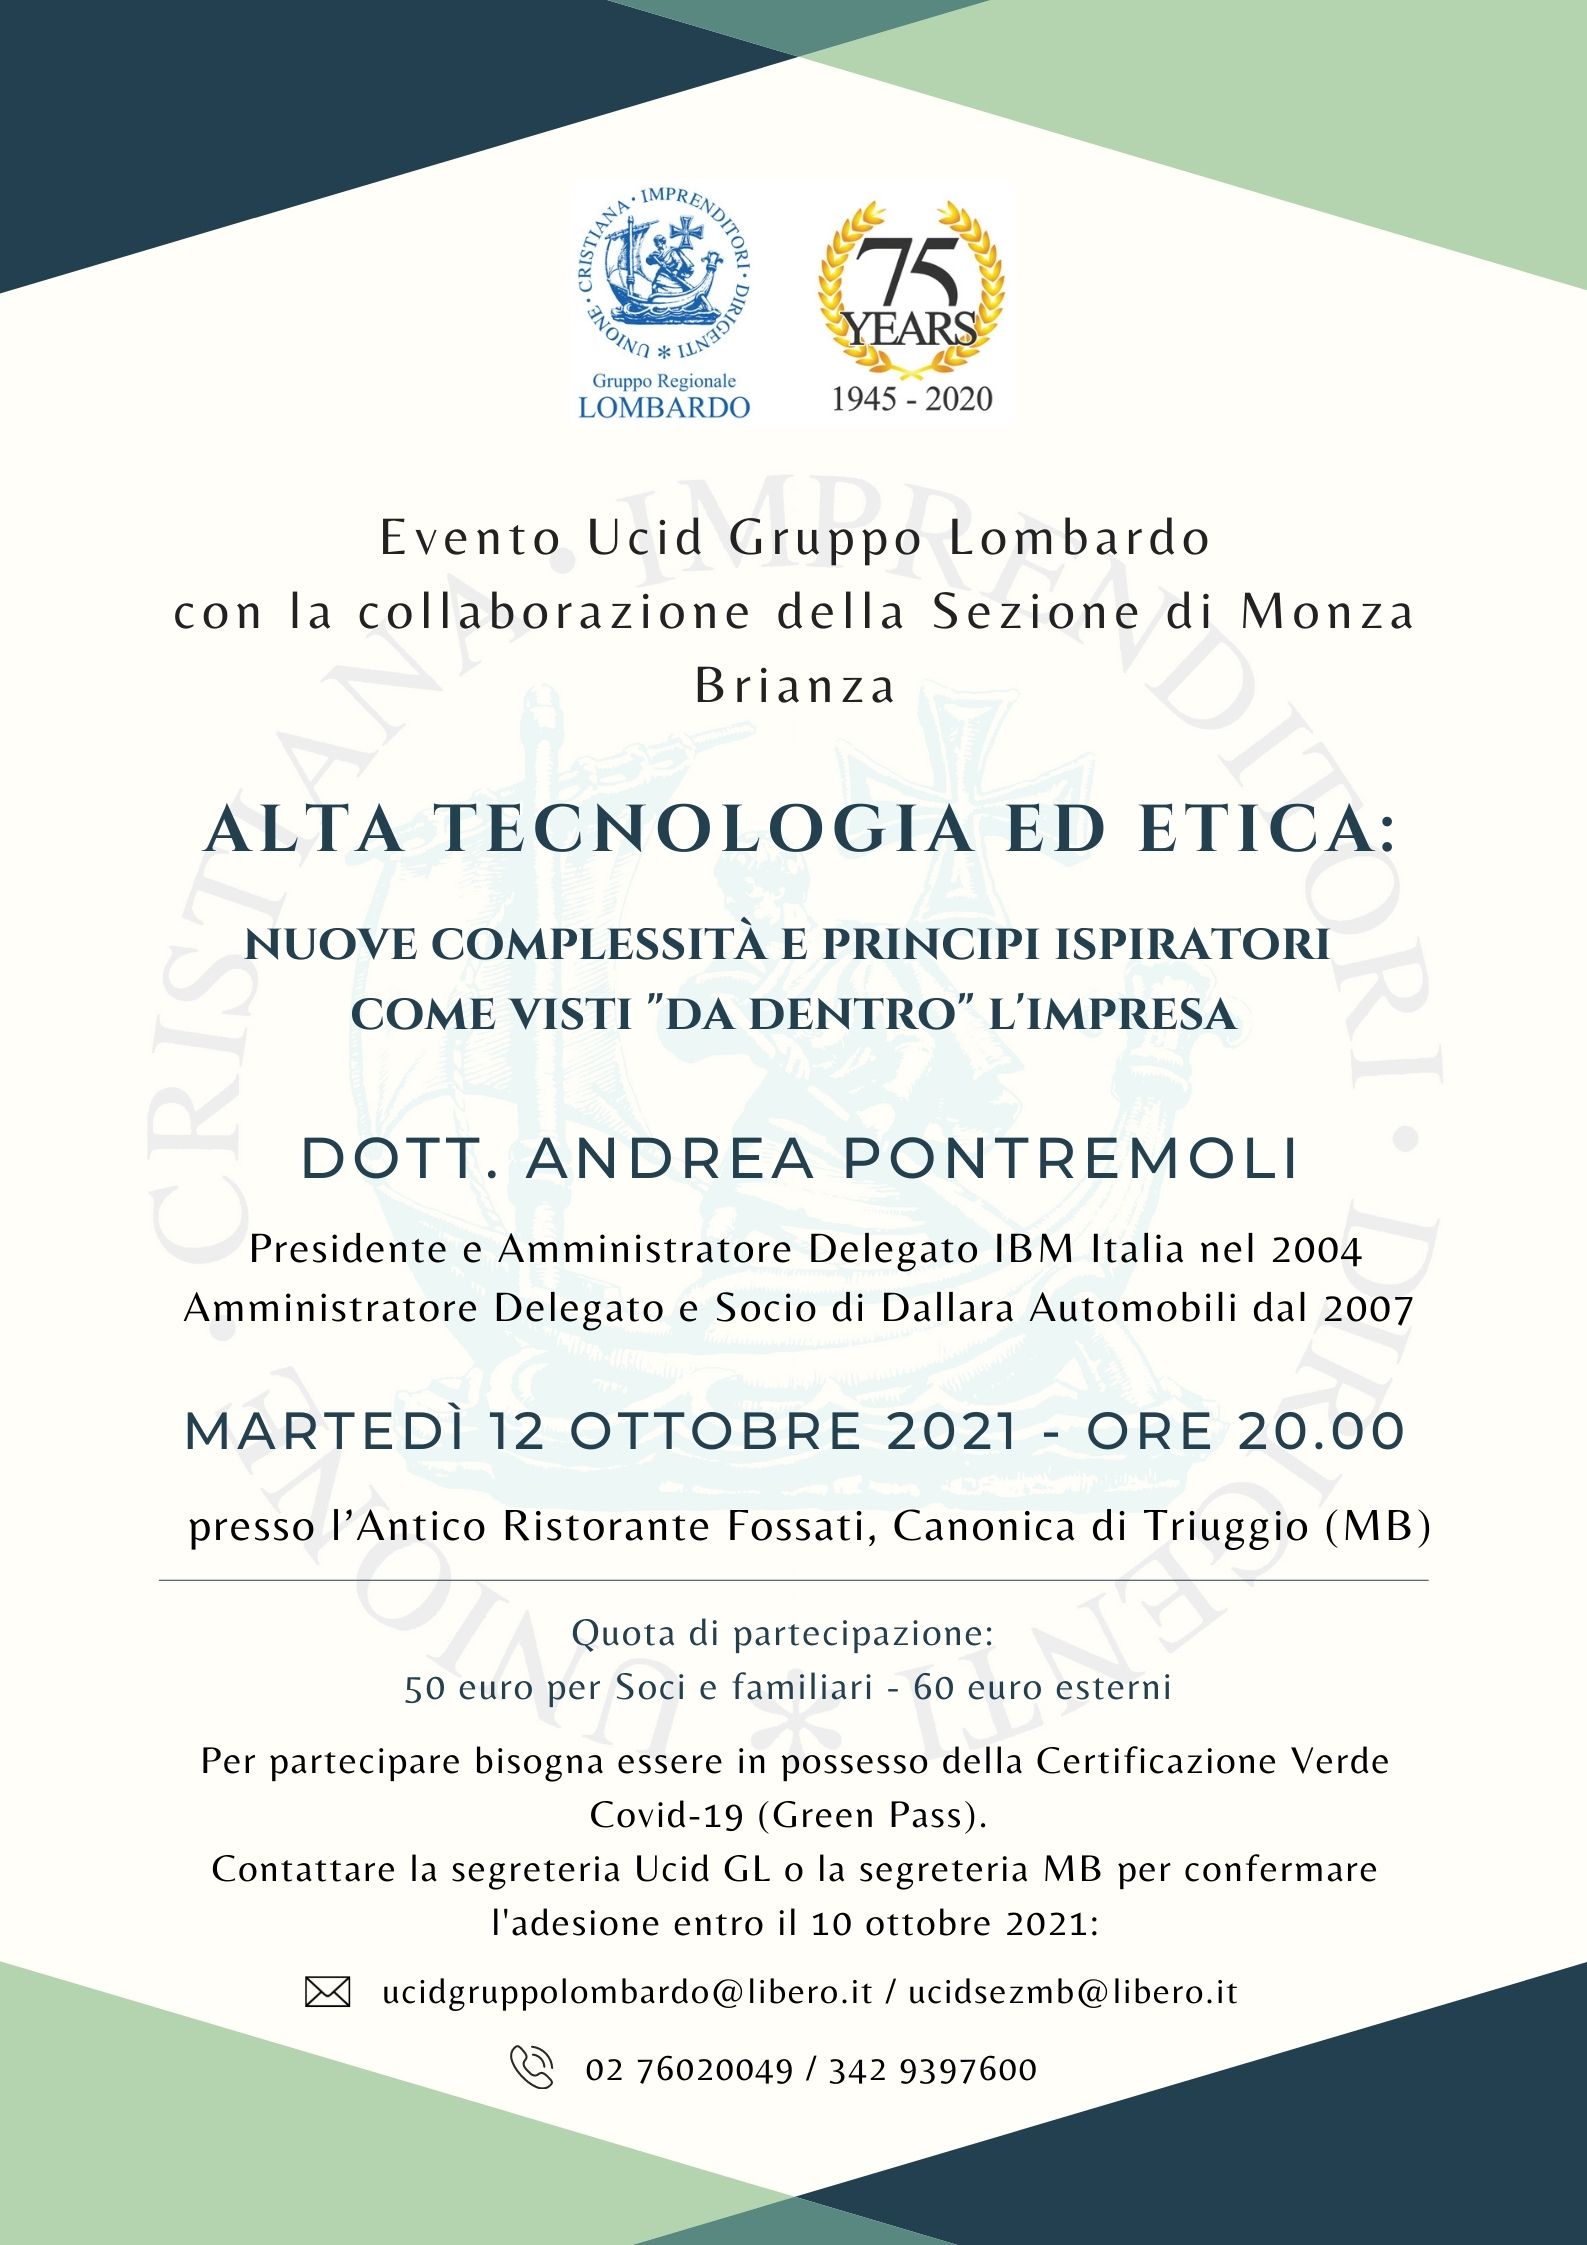 ALTA TECNOLOGIA ED ETICA - evento GL e MB